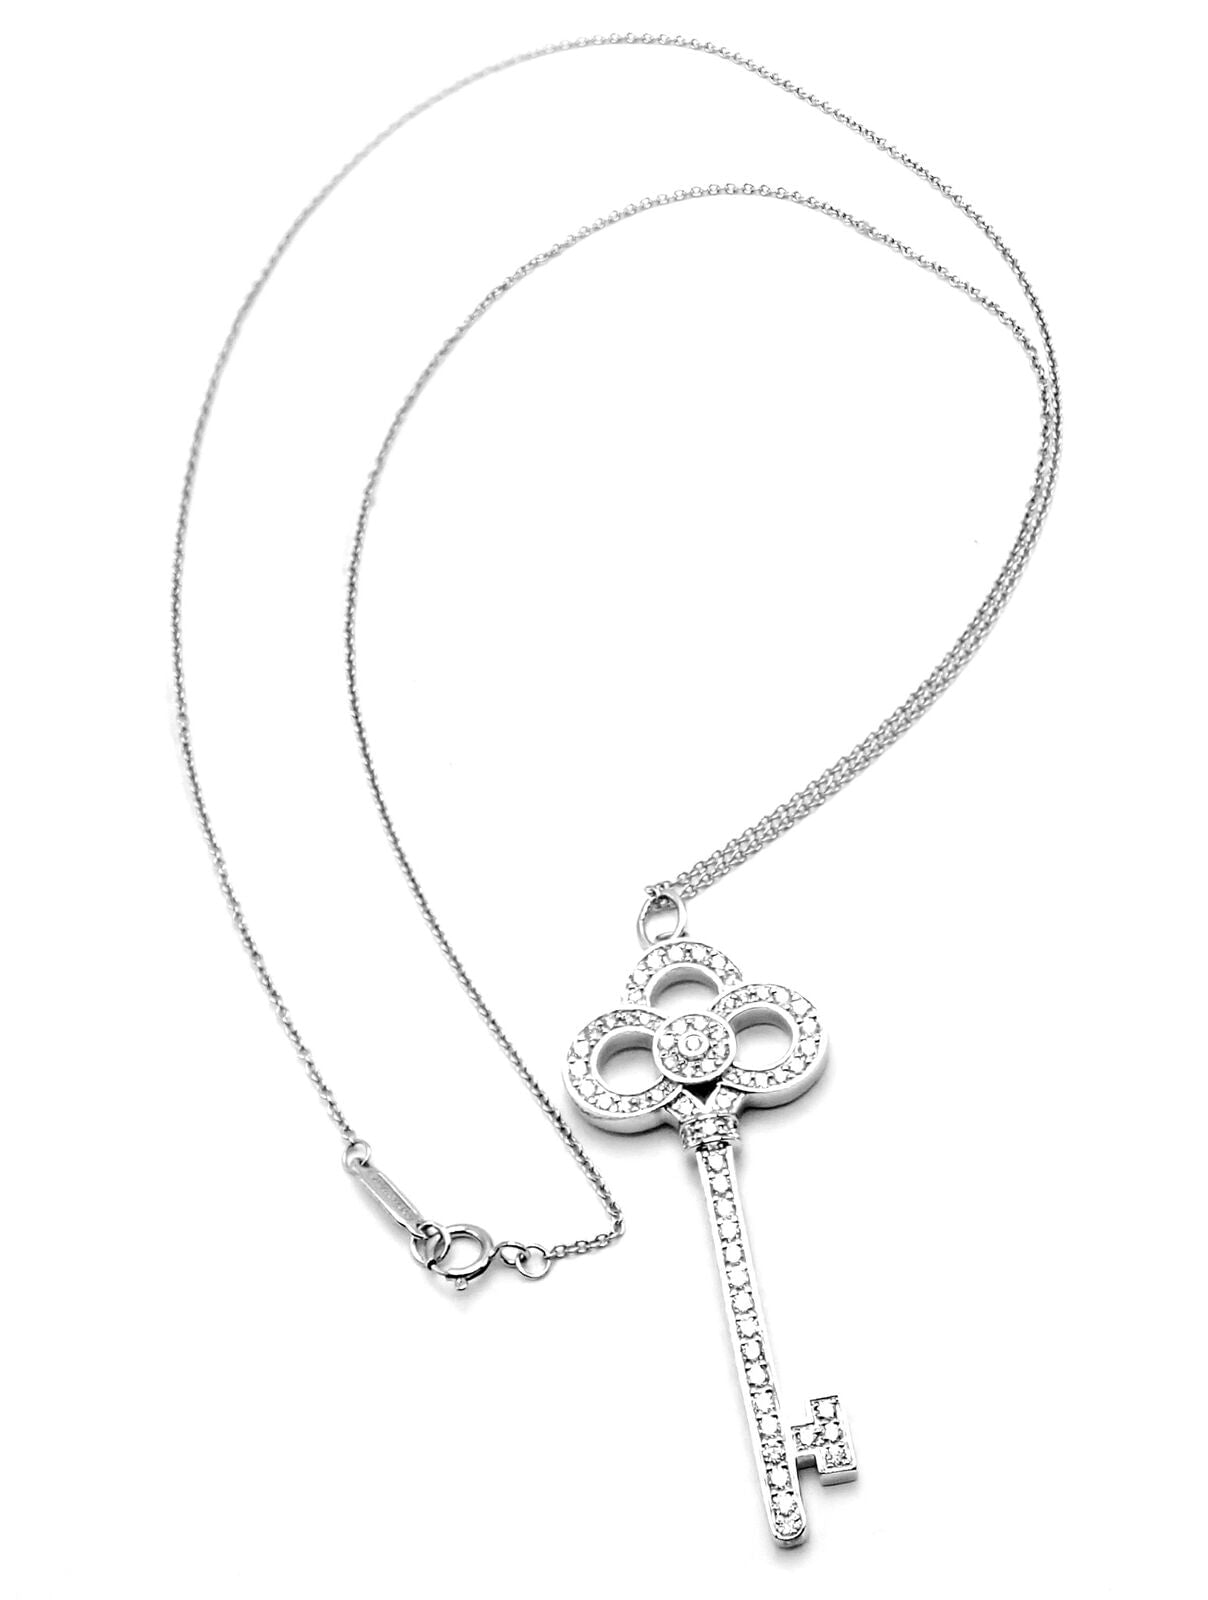 Tiffany & Co. Silver Crown Key Pendant Chain Necklace Tiffany & Co.